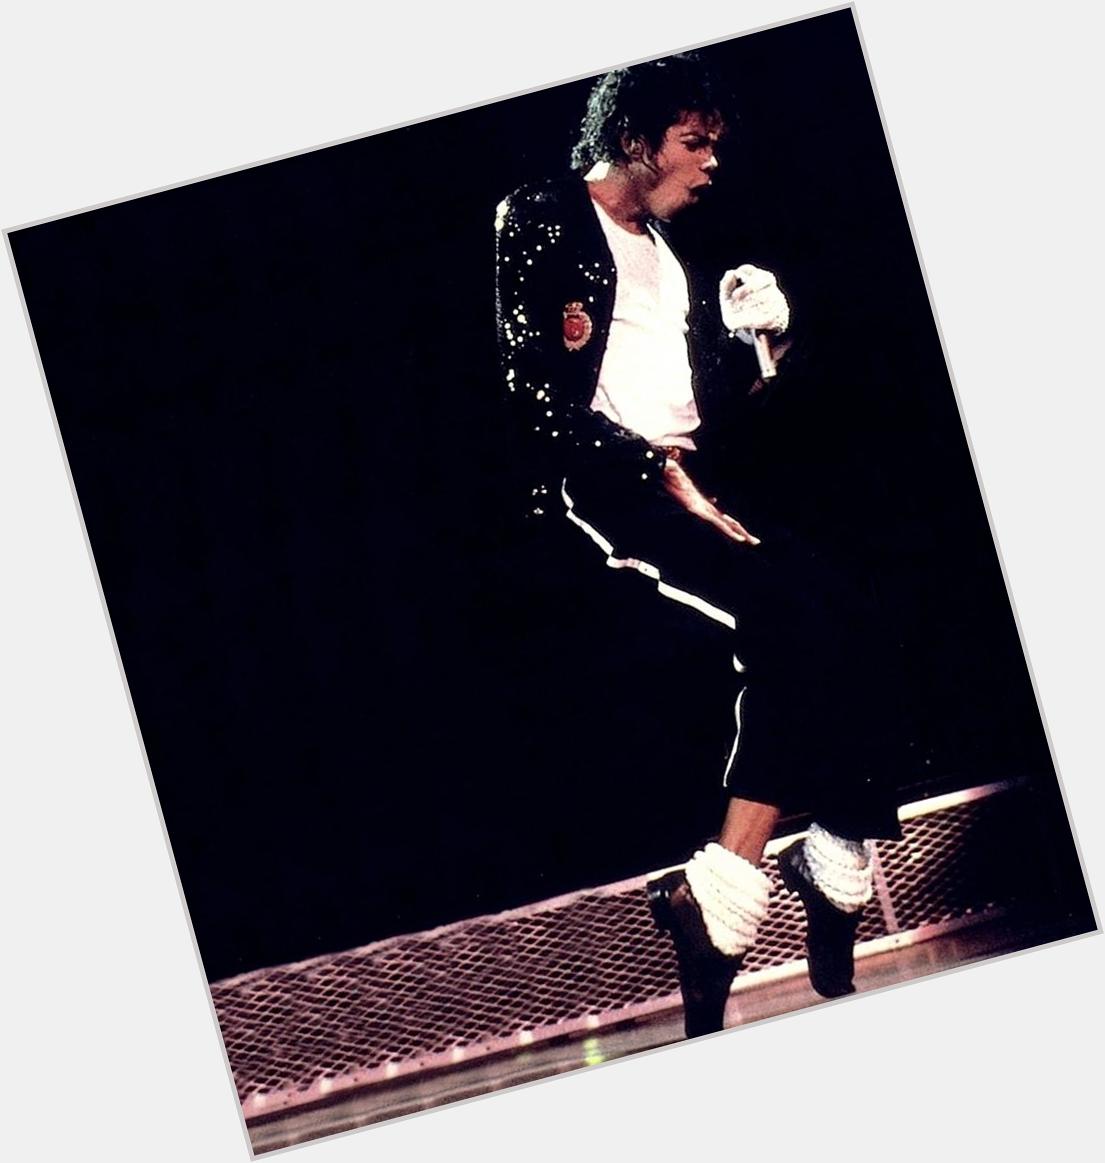 Happy birthday to the King of Pop, Michael Jackson.  